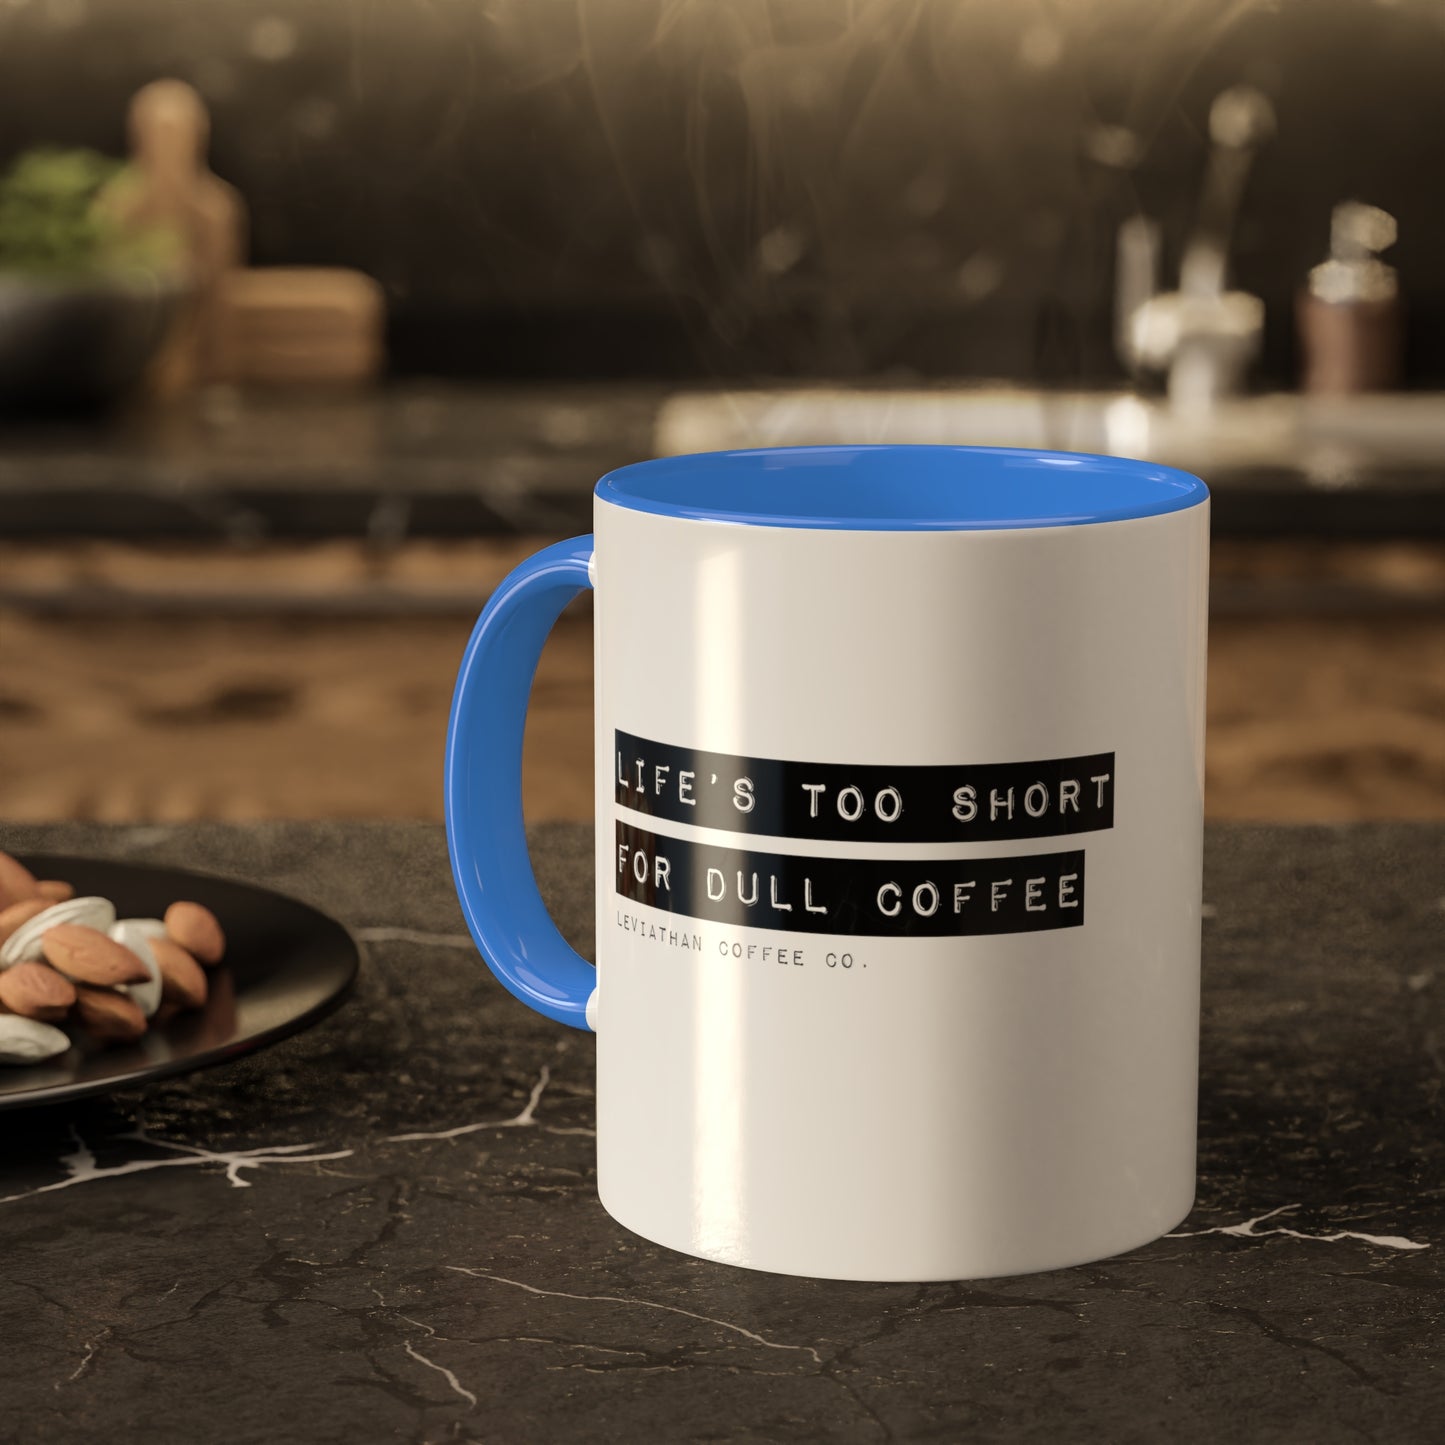 Life's Too Short for Dull Coffee coffee mug